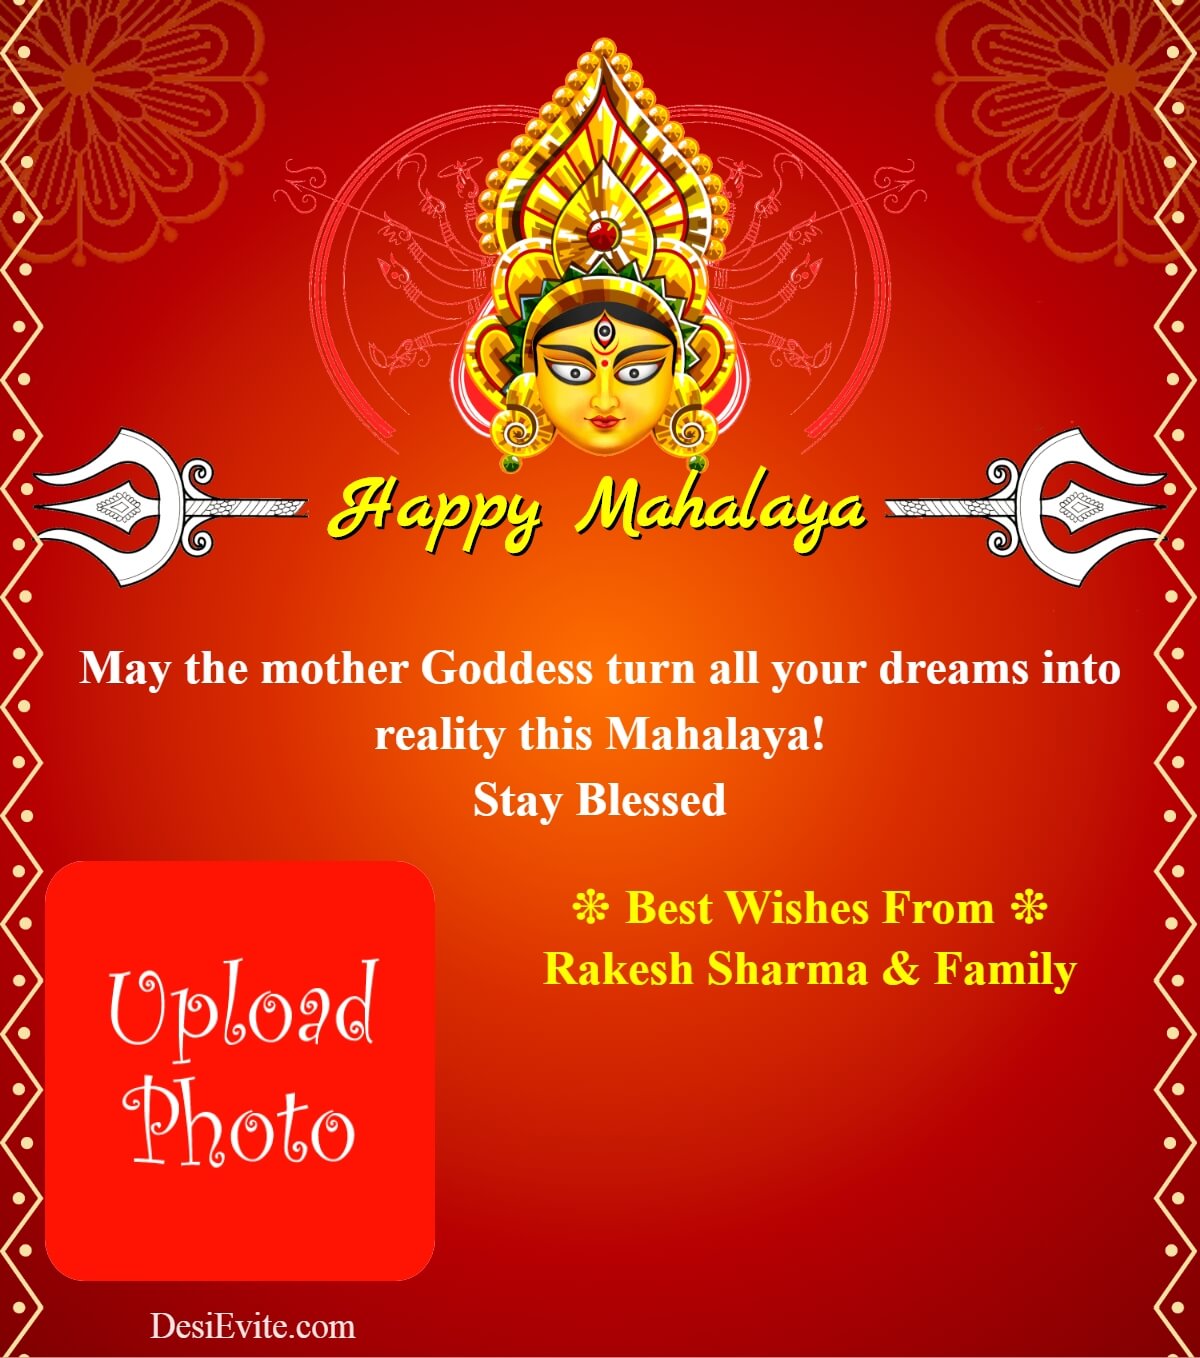 mahalaya wishes greeting card template 43 